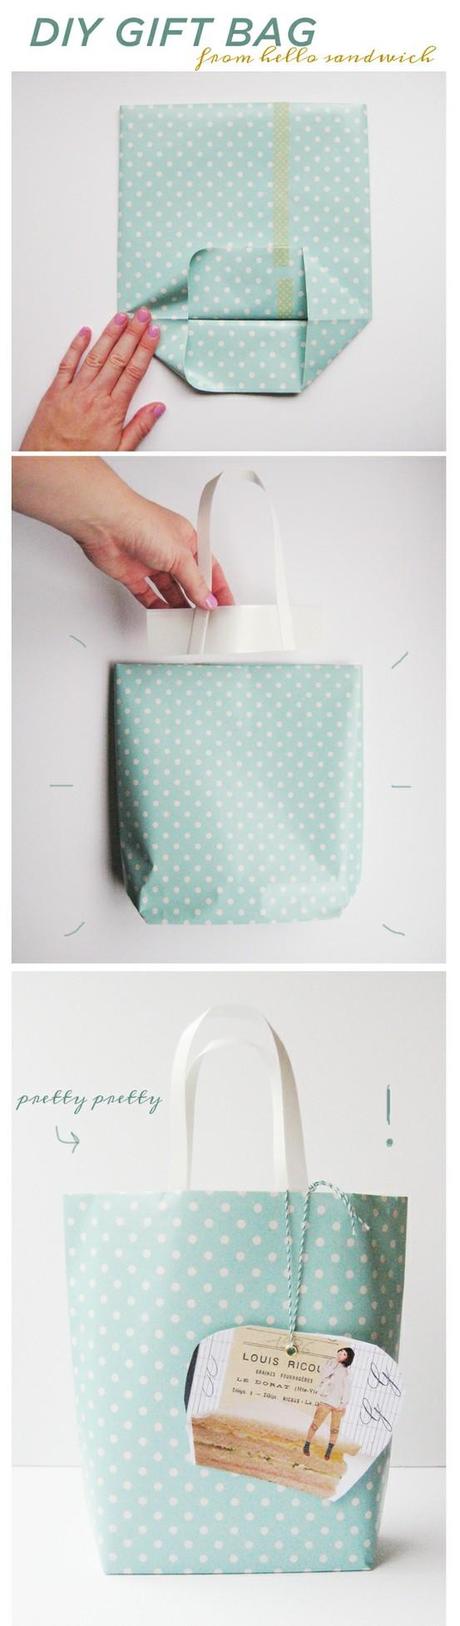 Craft Project: diy gift bag